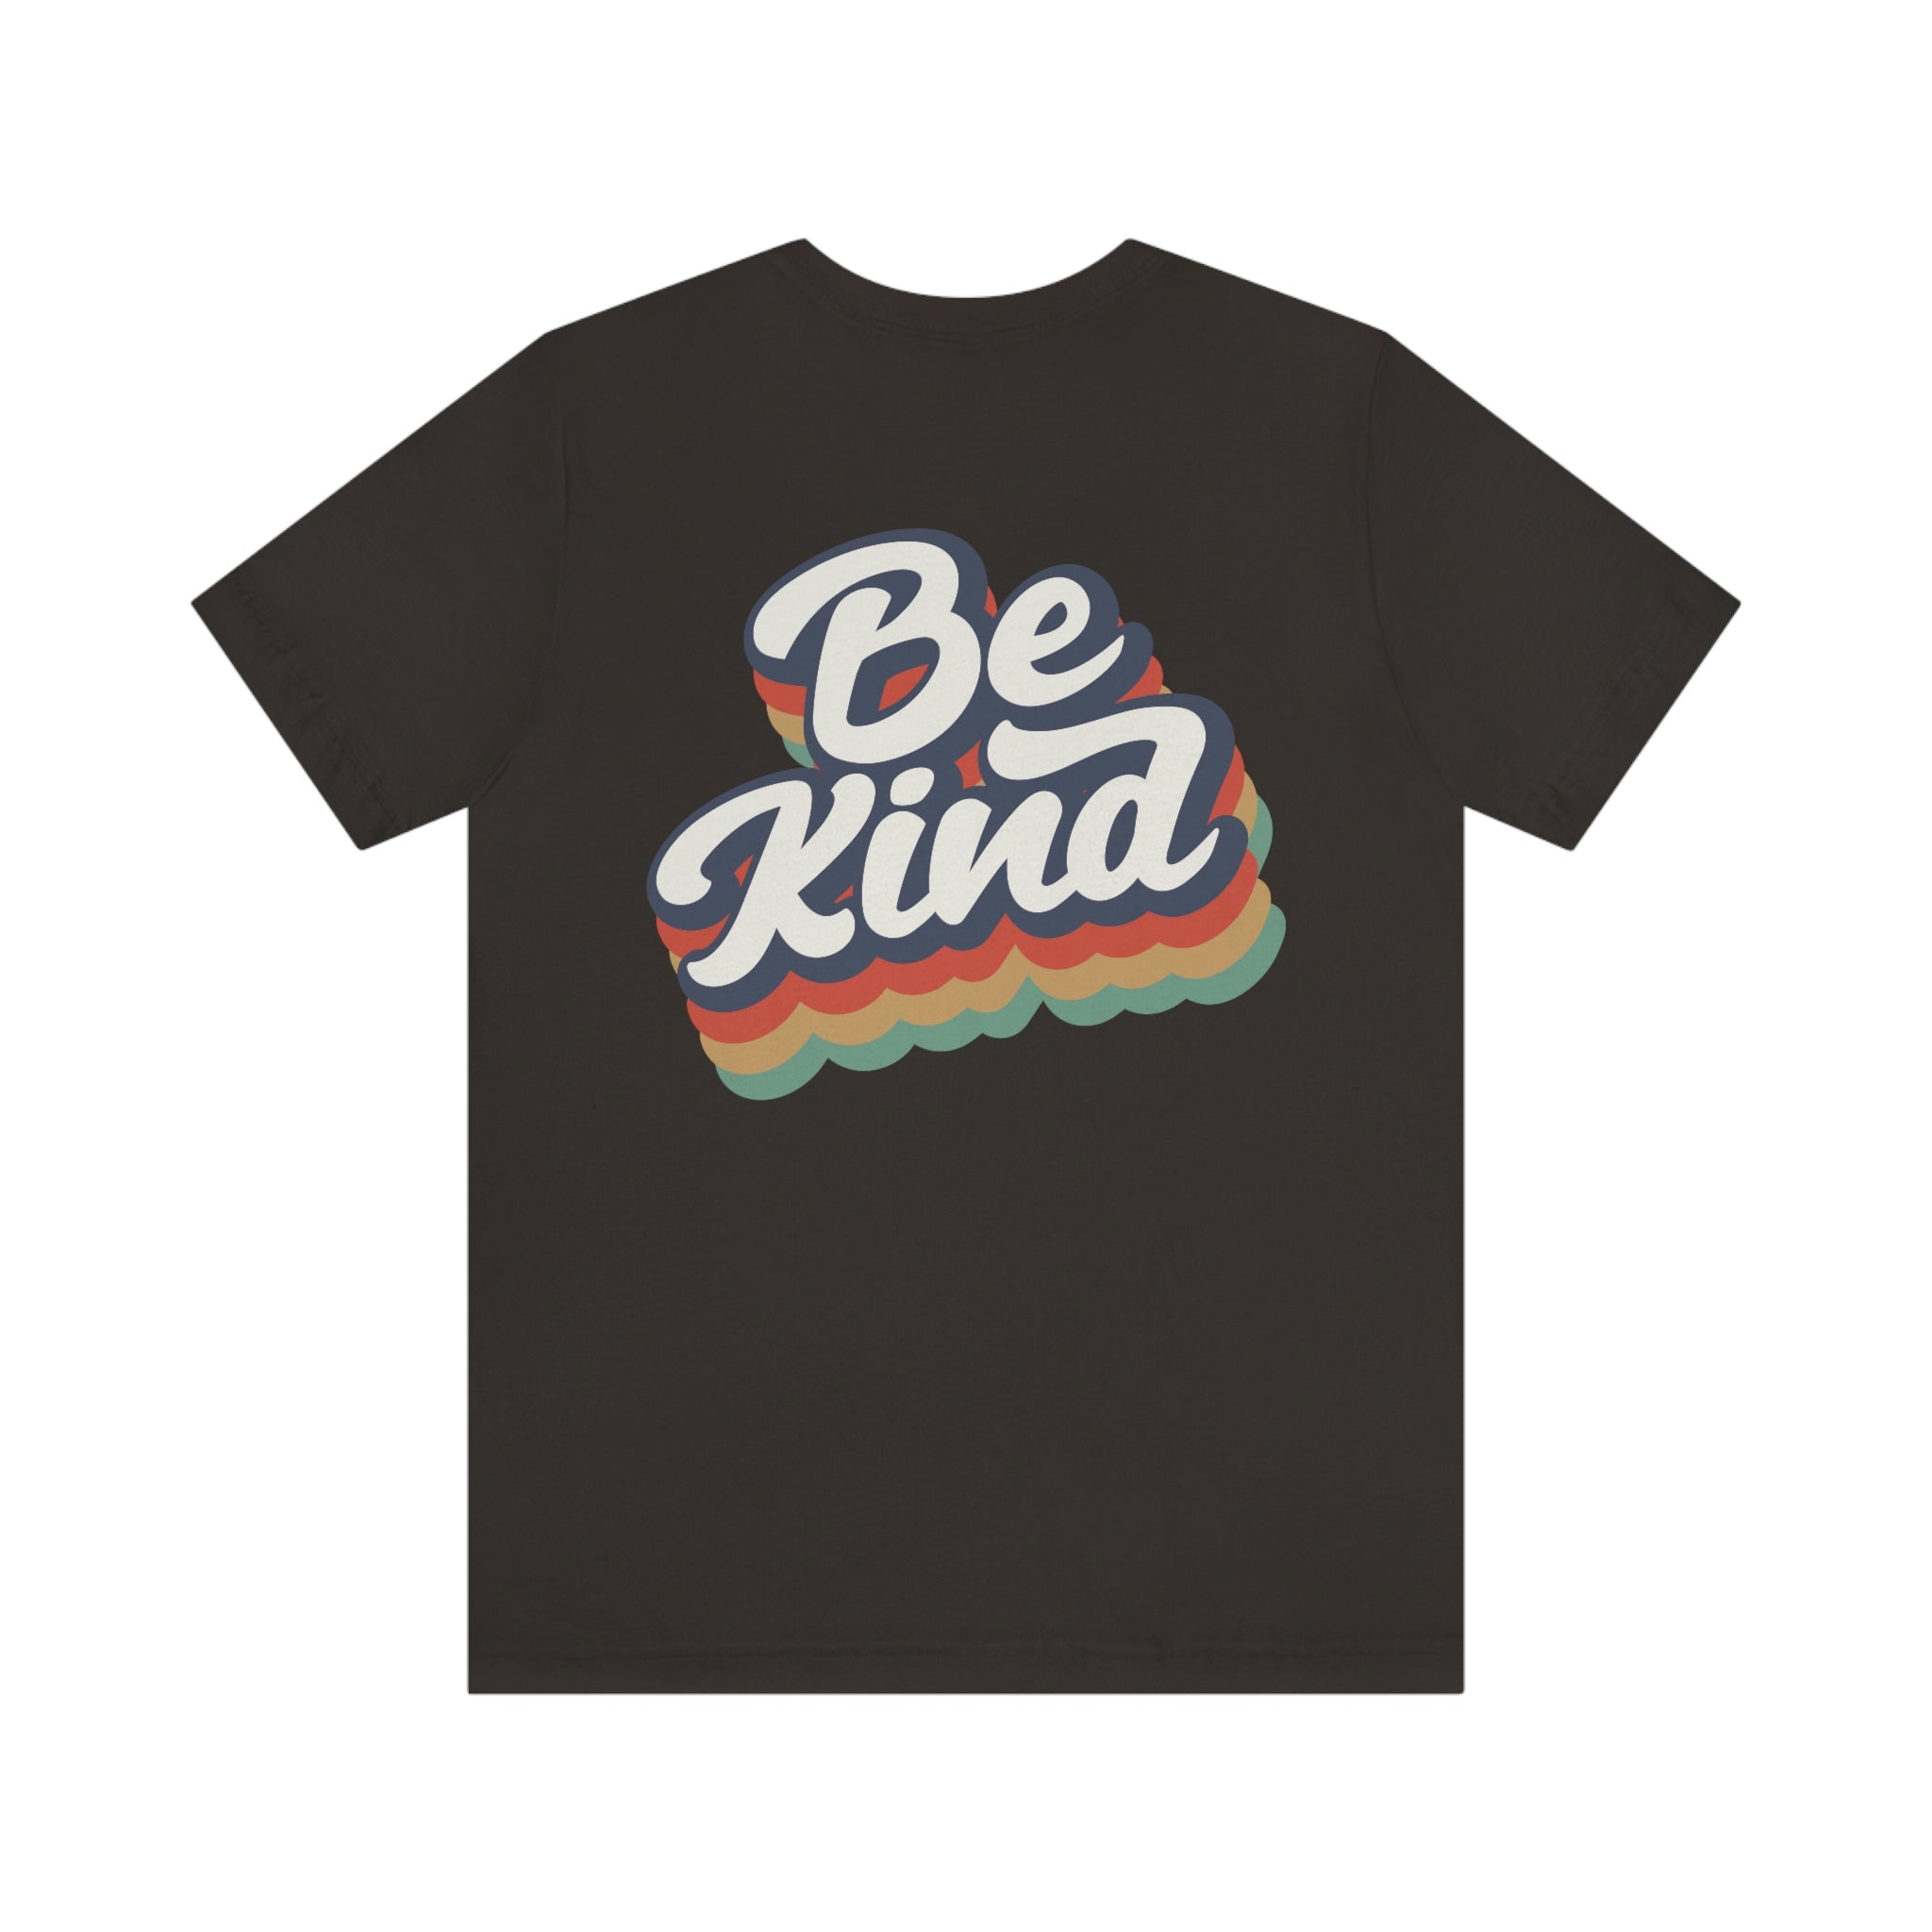 Be Kind (Print on back), Unisex 100% Premium Comfy Cotton, T-Shirt by Bella+Canvas